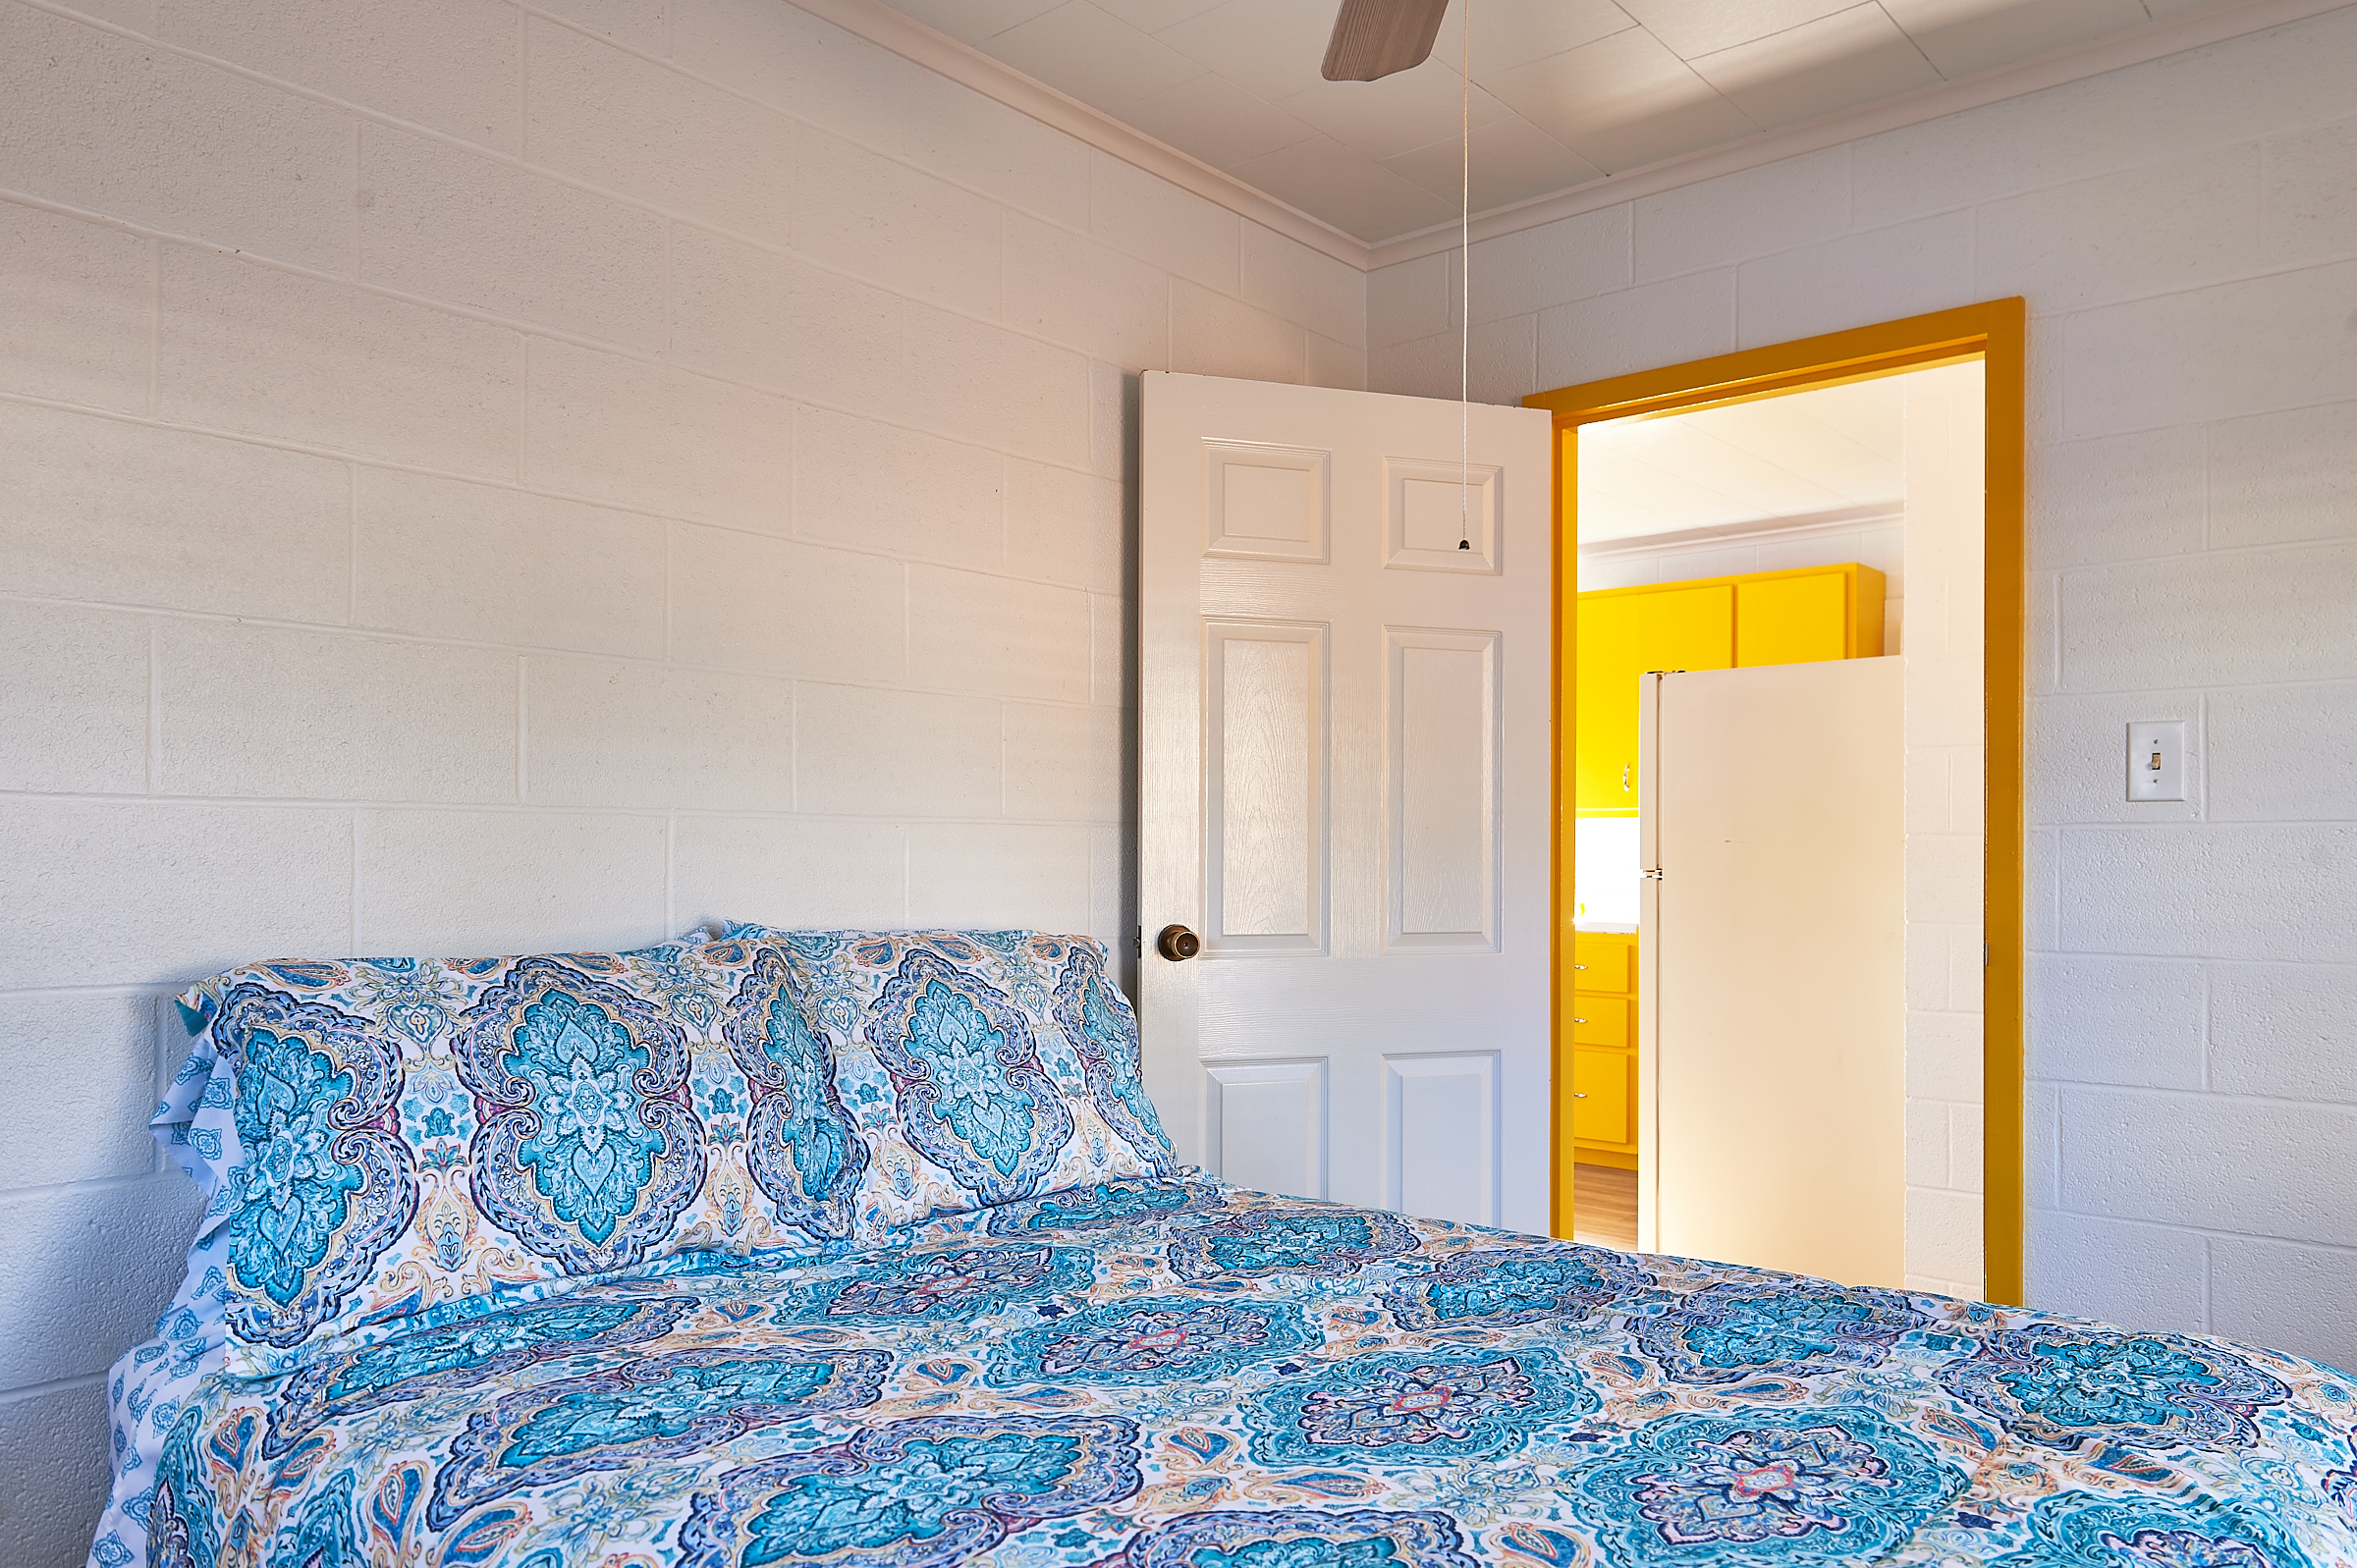 Bluebonnet Cabin Spare Bedroom Image 6